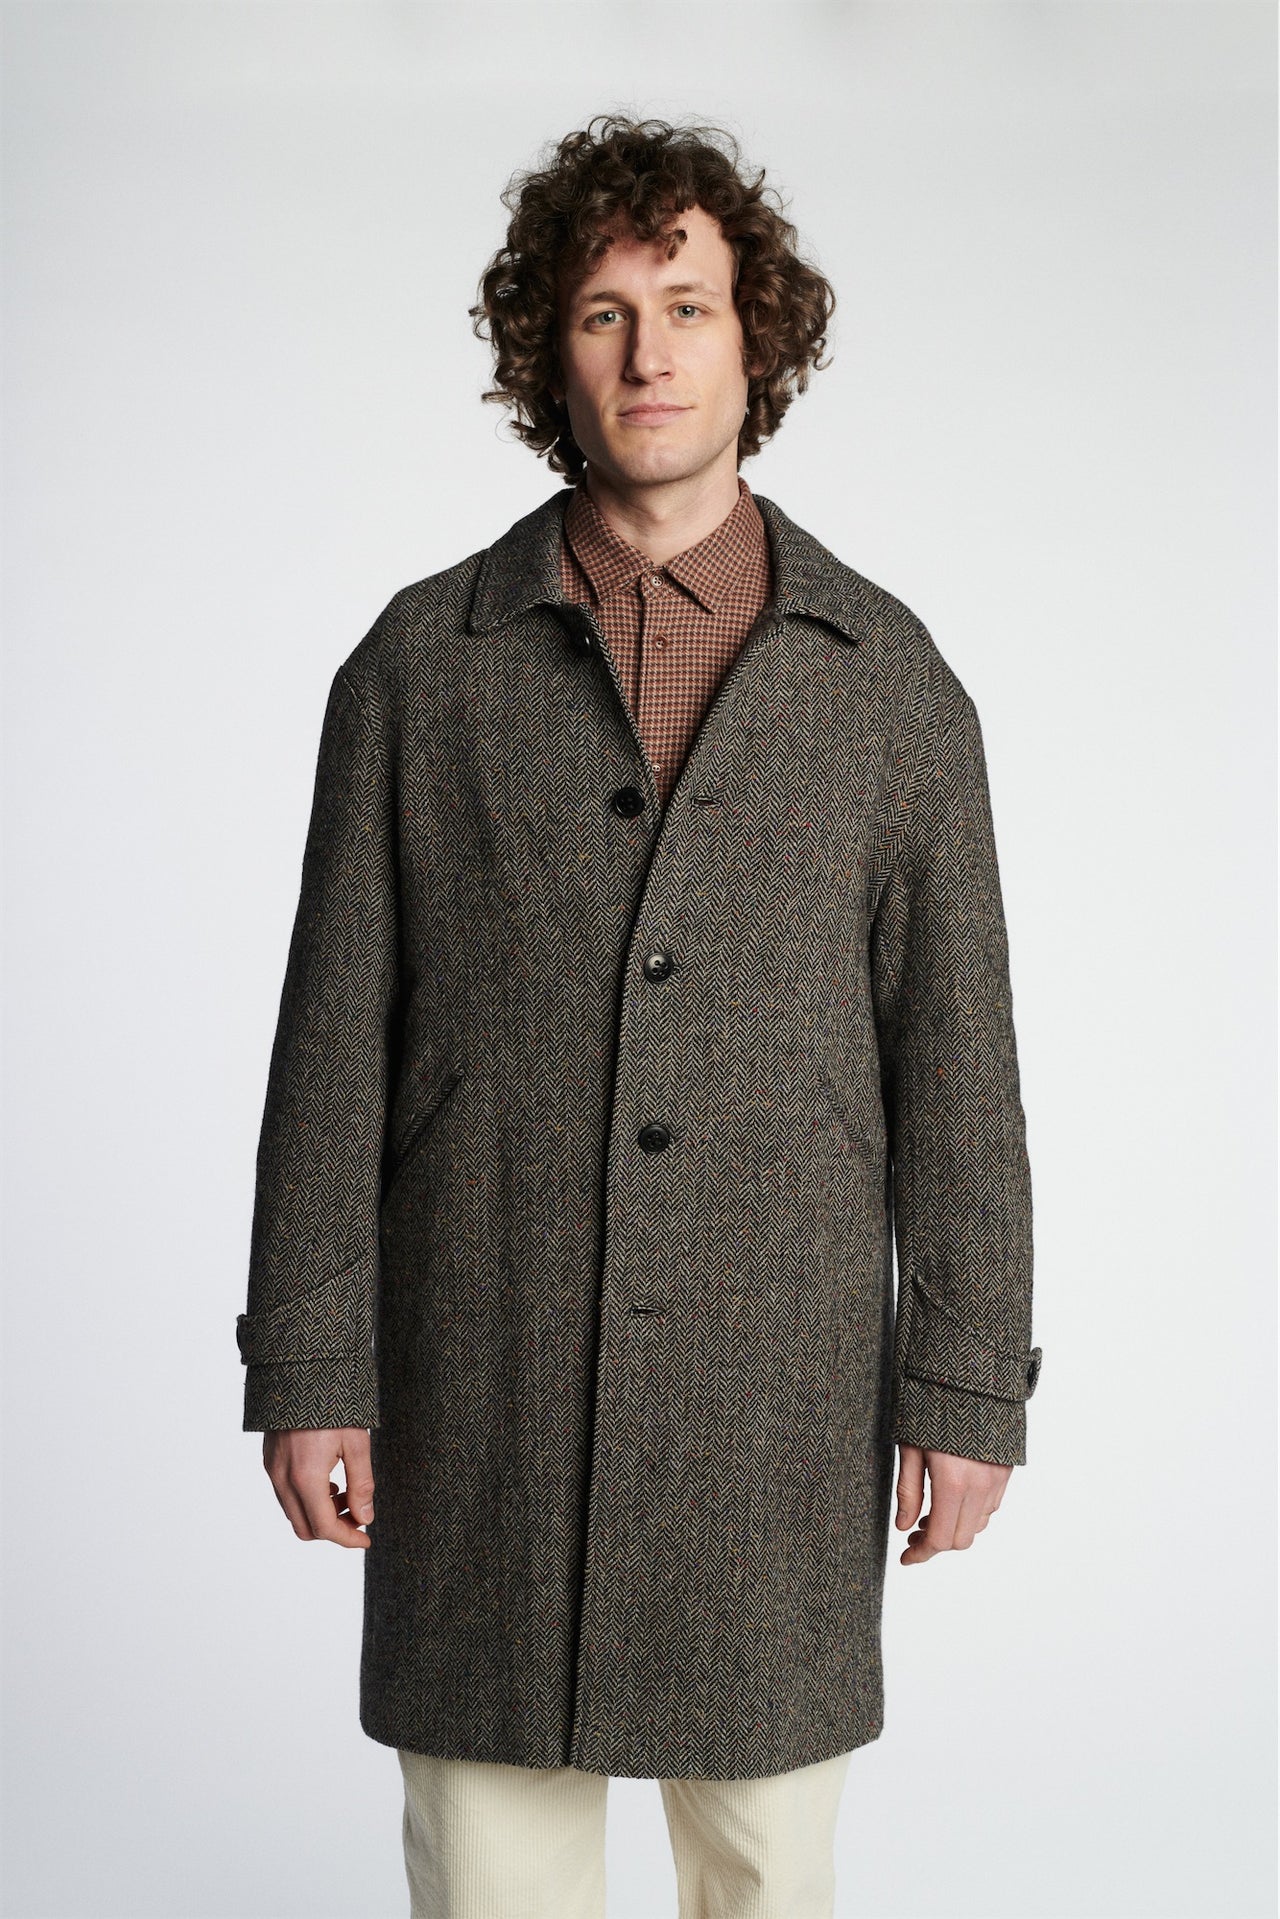 Winter Coat in a Grey and Black Italian Virgin Wool Herringbone Tweed with Meida Thermo Insulation